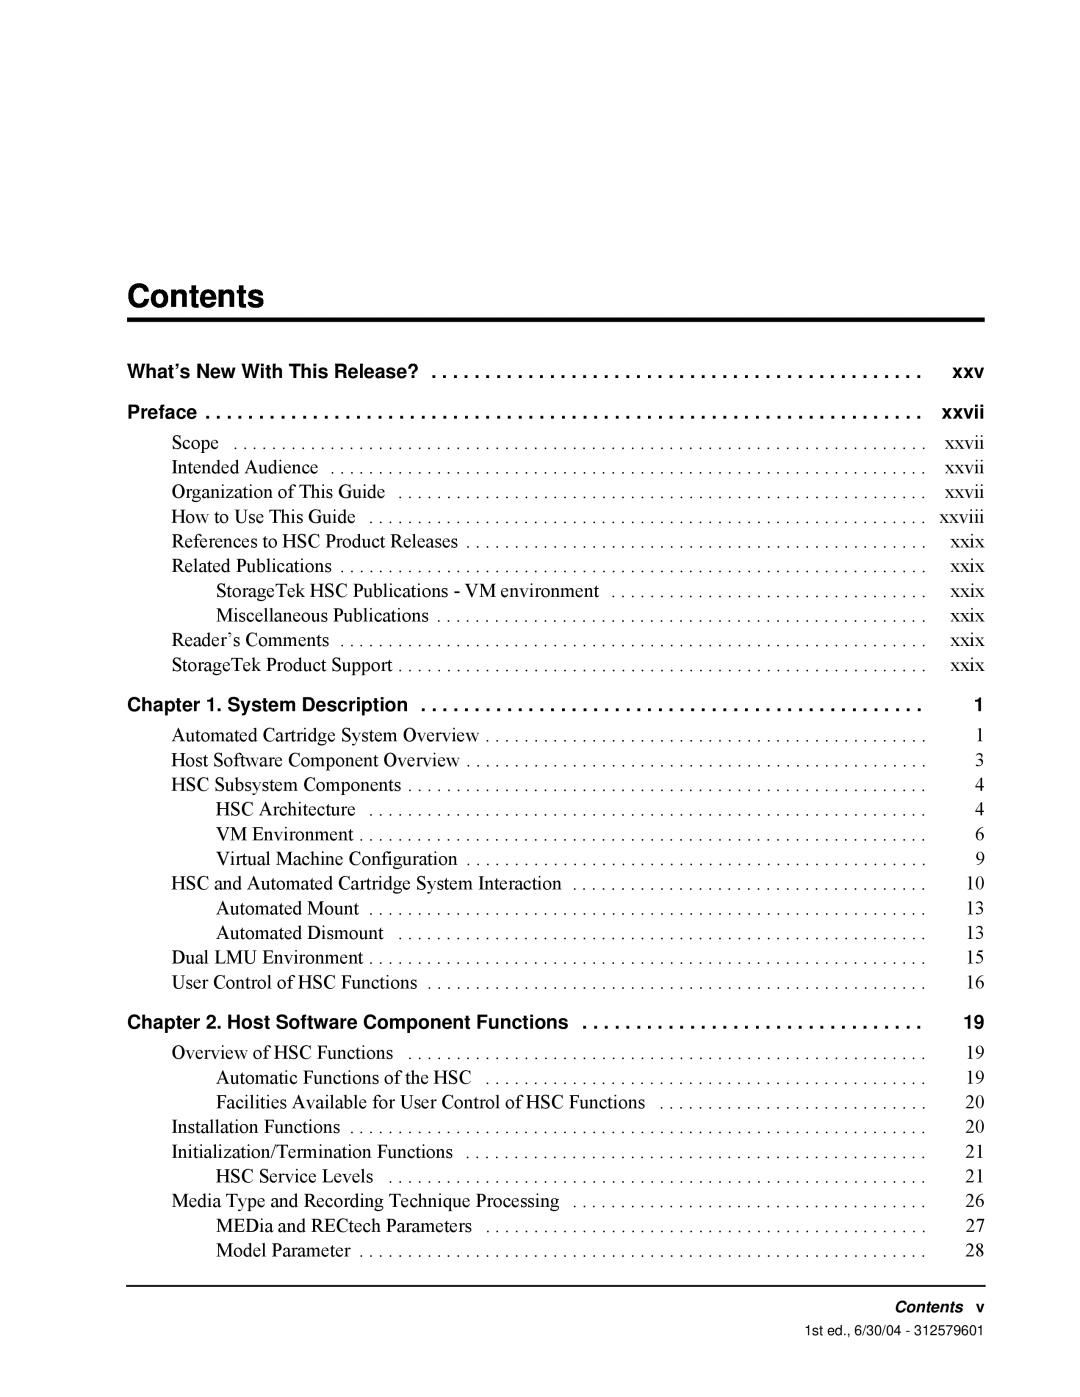 StorageTek 6 manual Contents, What’s New With This Release?, Preface, xxvii, System Description 